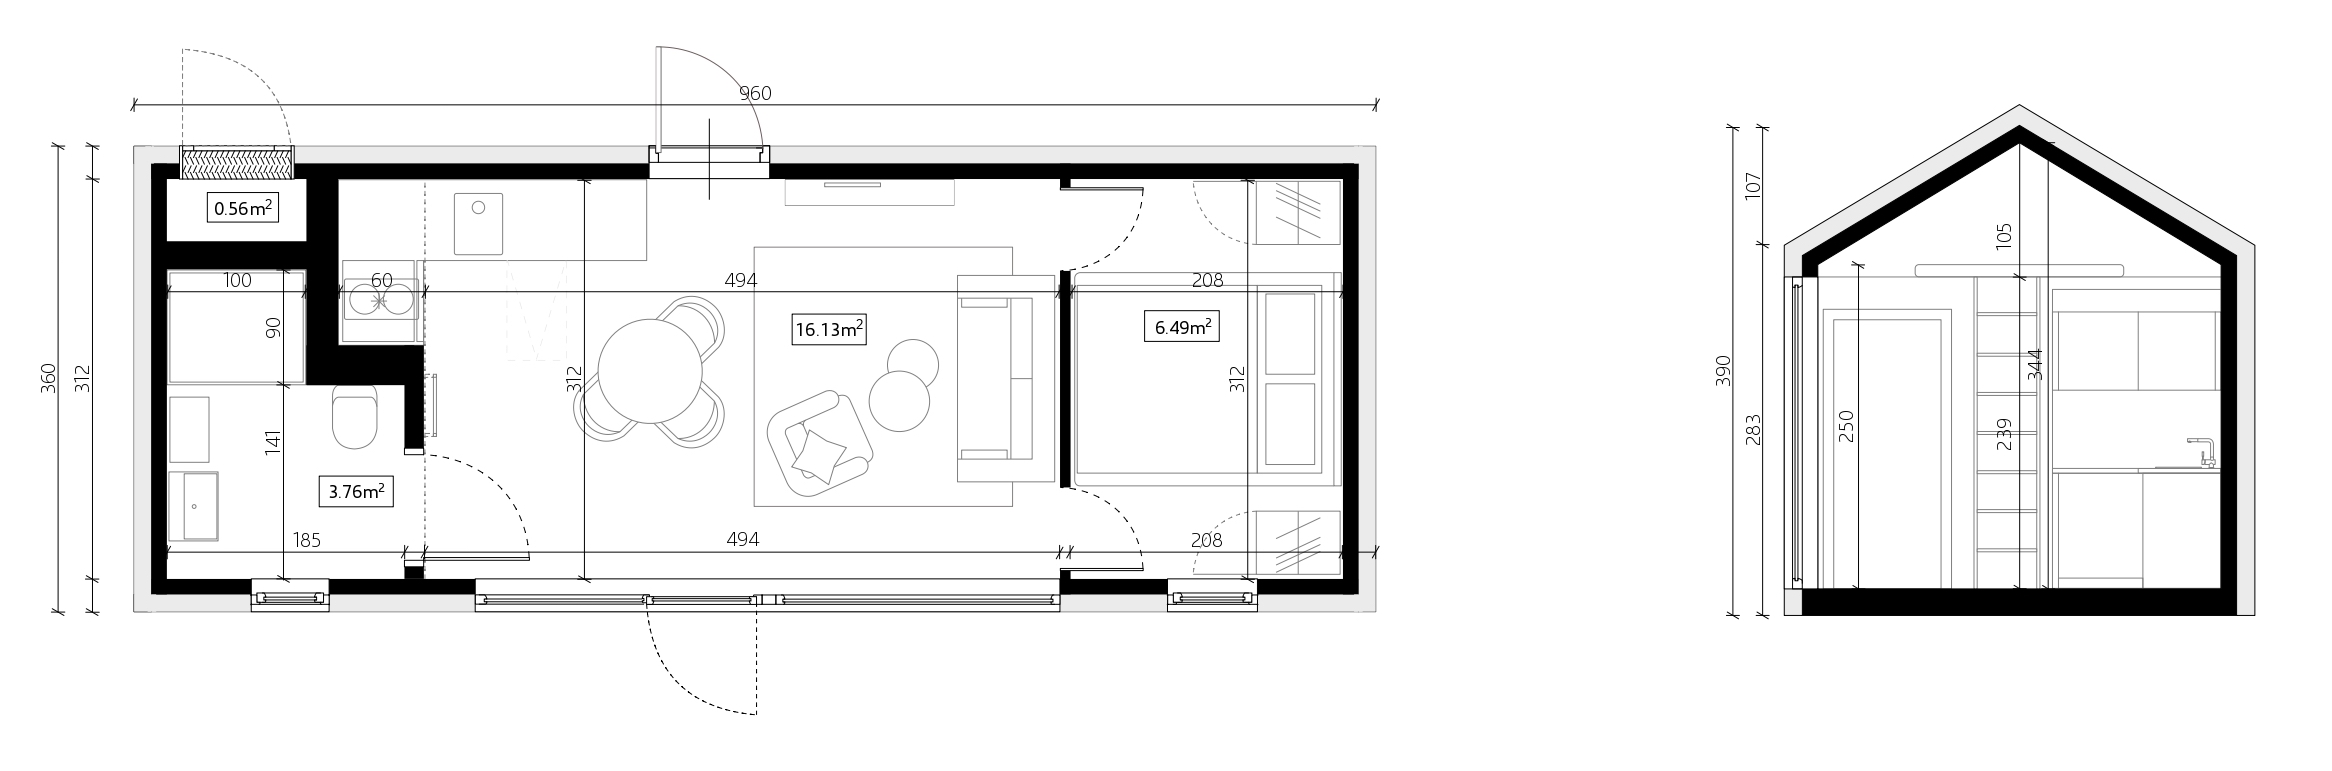 Floorplan Malmo 2